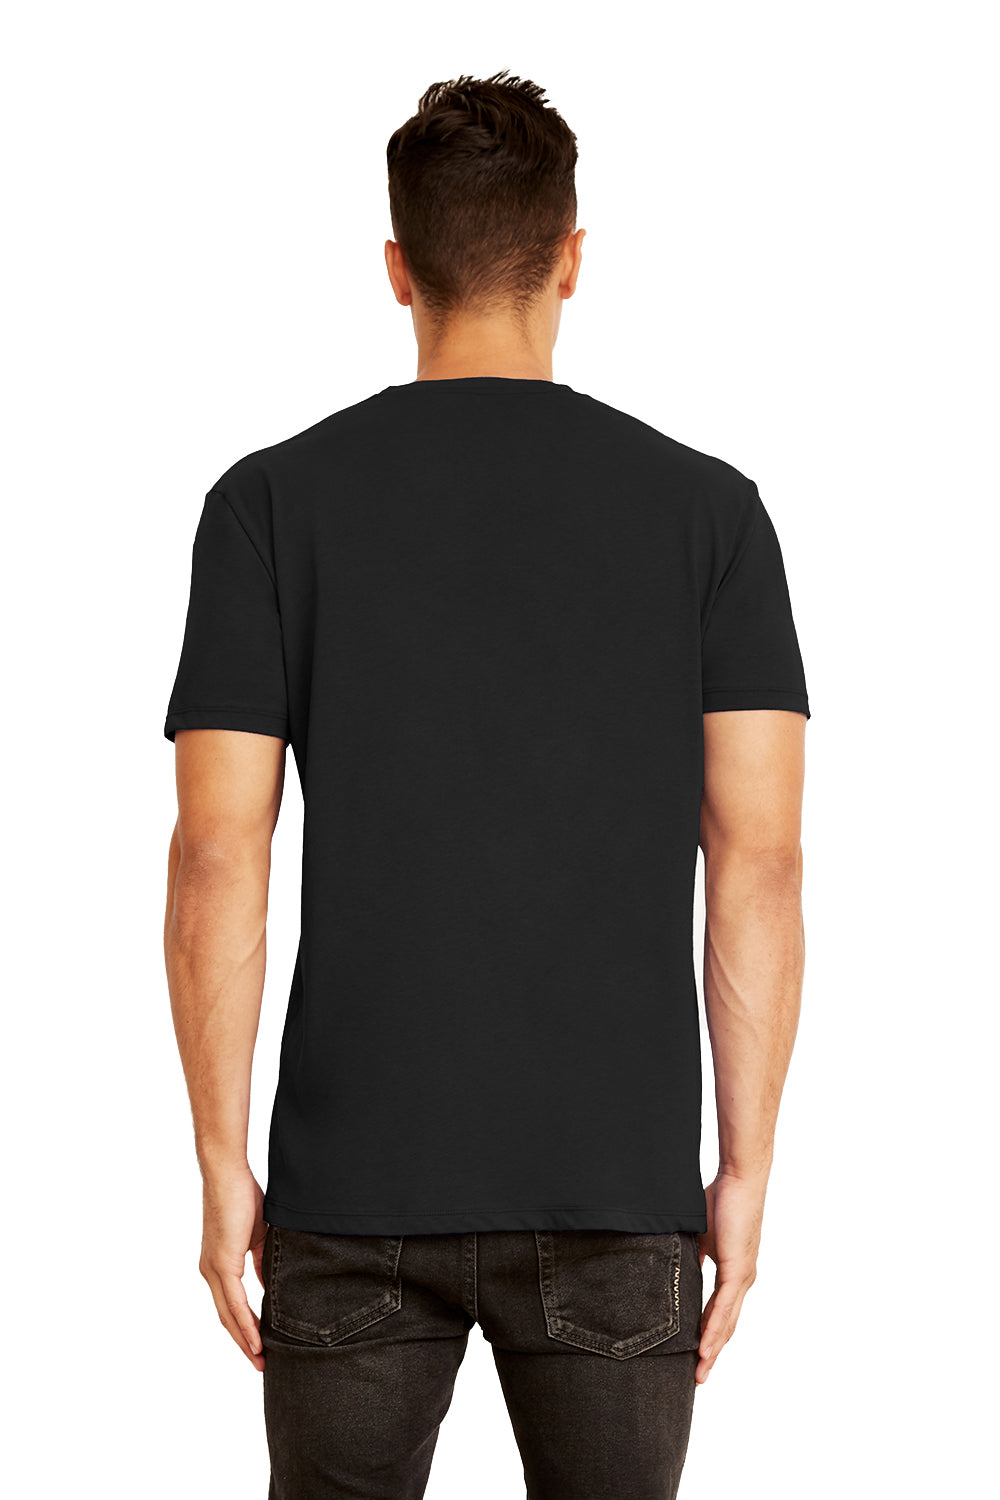 Next Level 4210 Mens Eco Performance Short Sleeve Crewneck T-Shirt Black Back